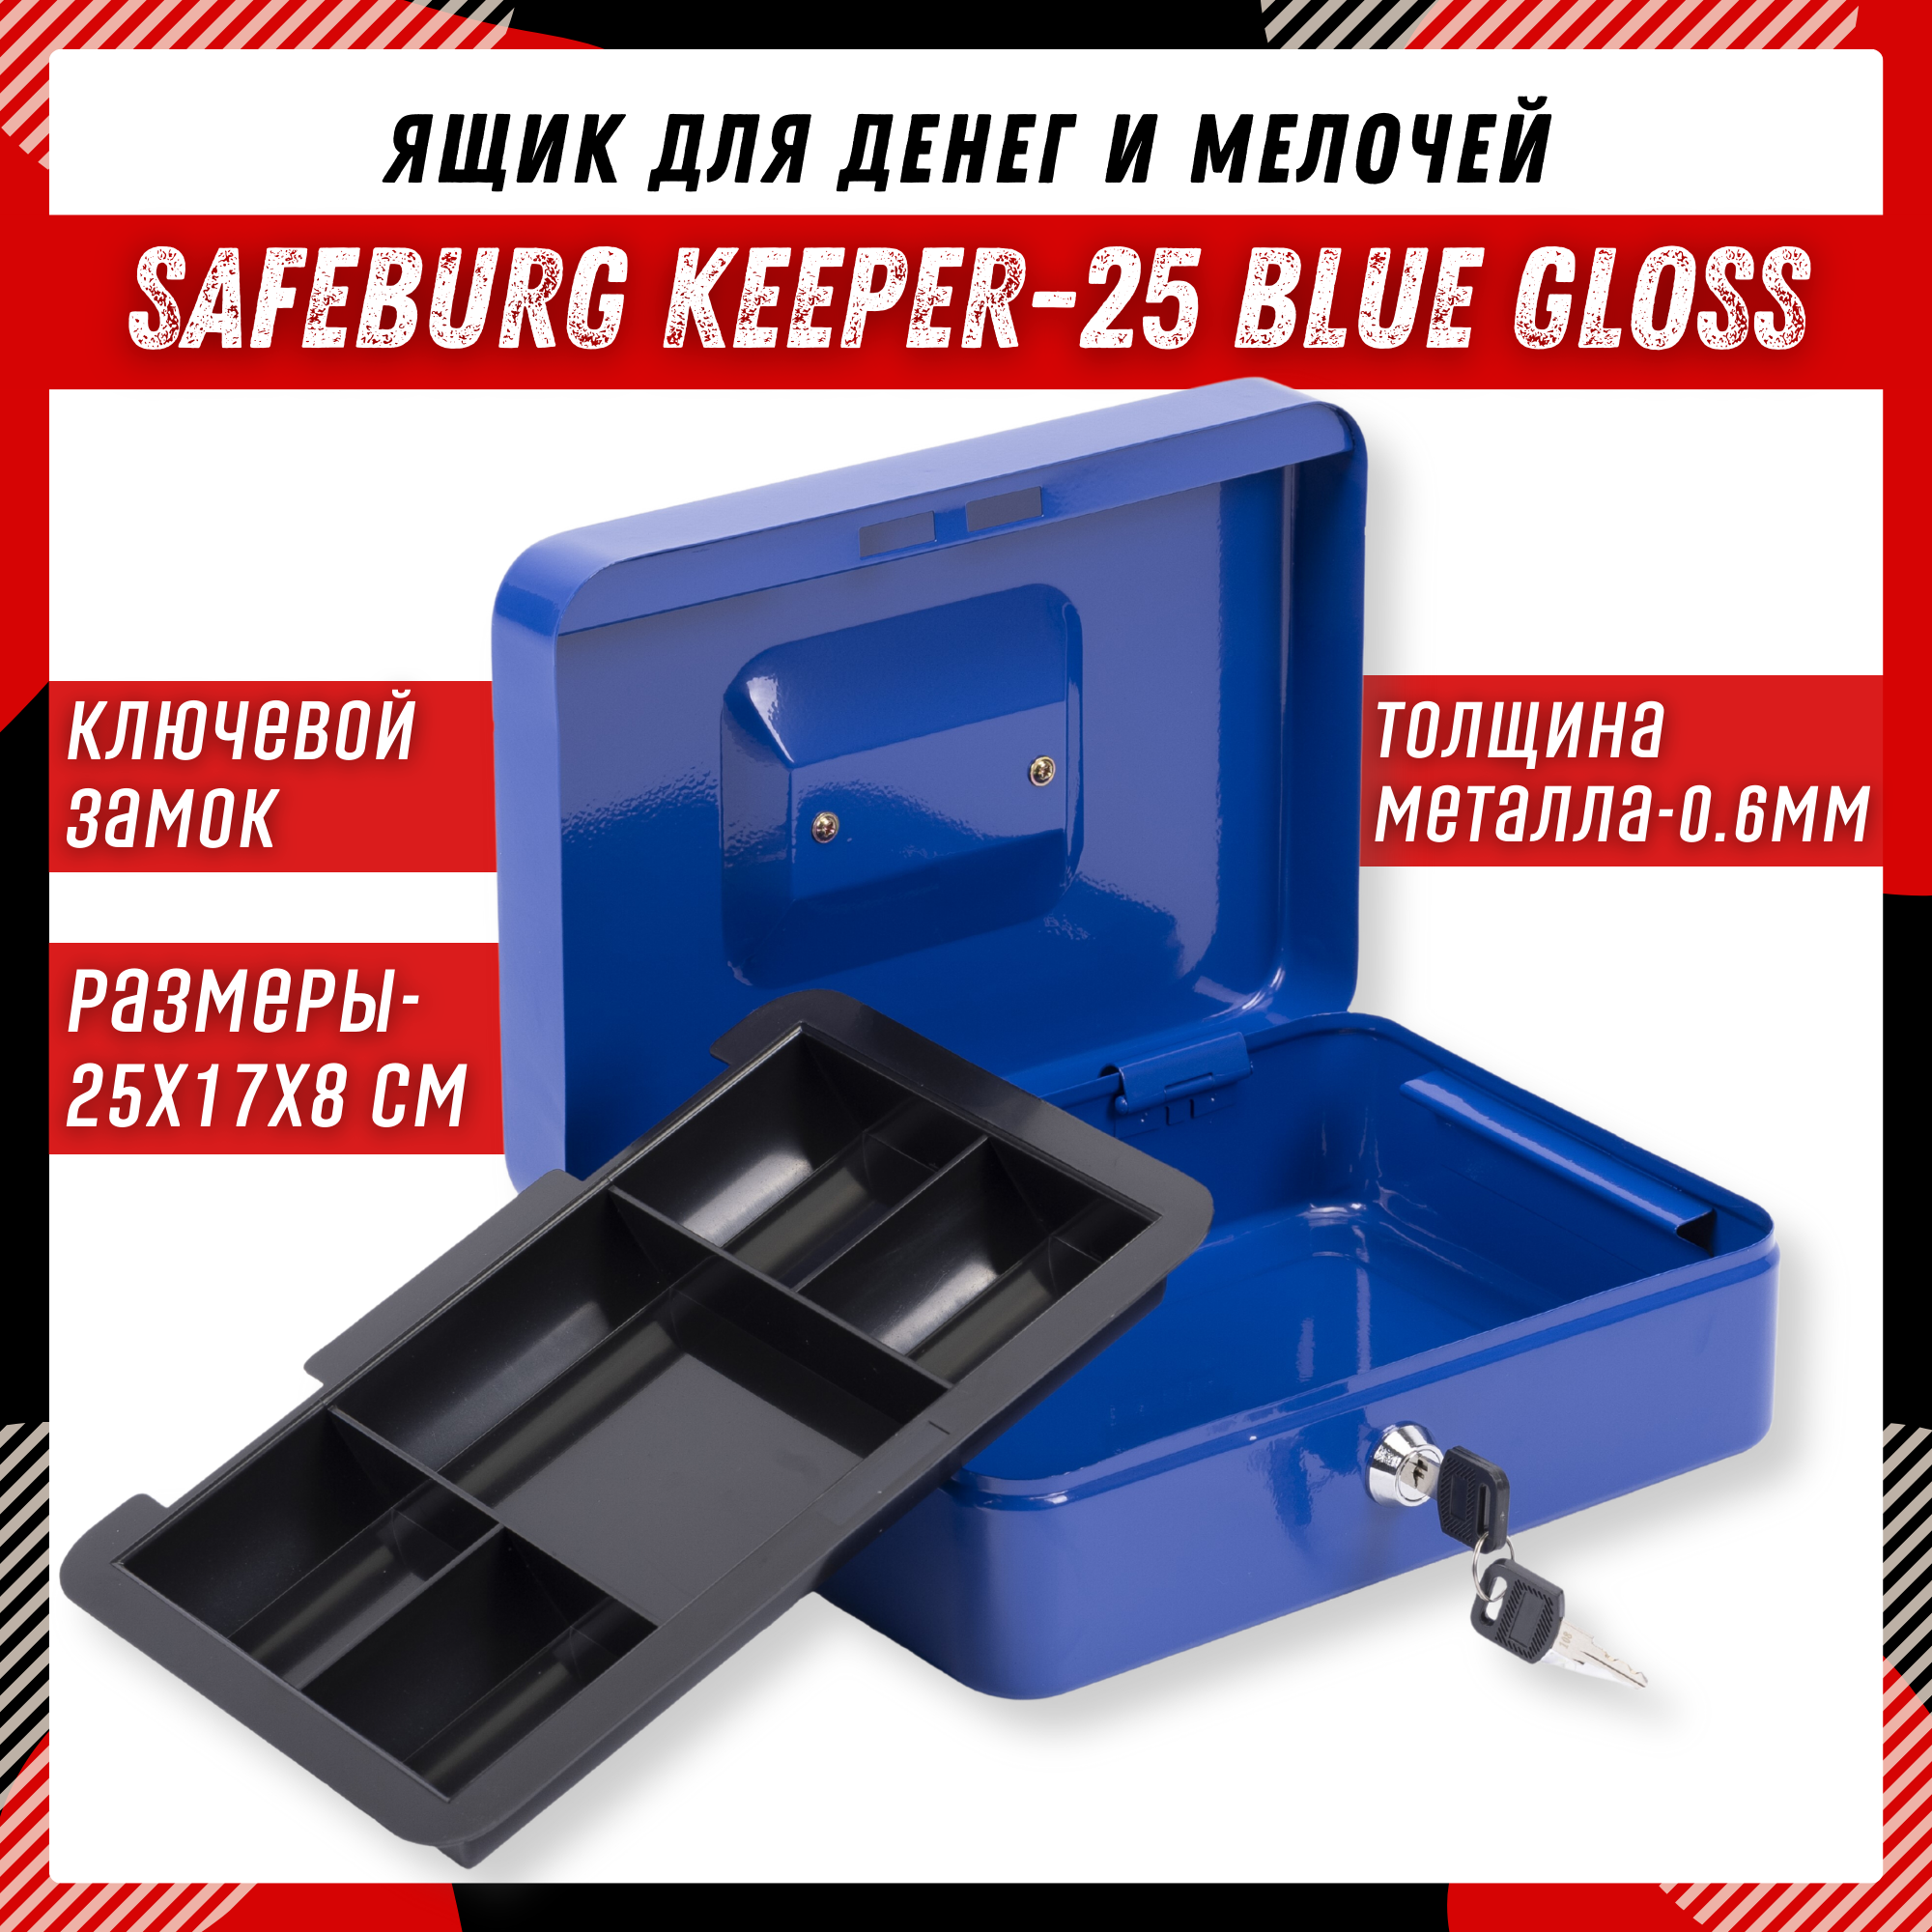 Ящик для денег SAFEBURG Keeper-25 Blue Gloss, переносной сейф/кэшбокс